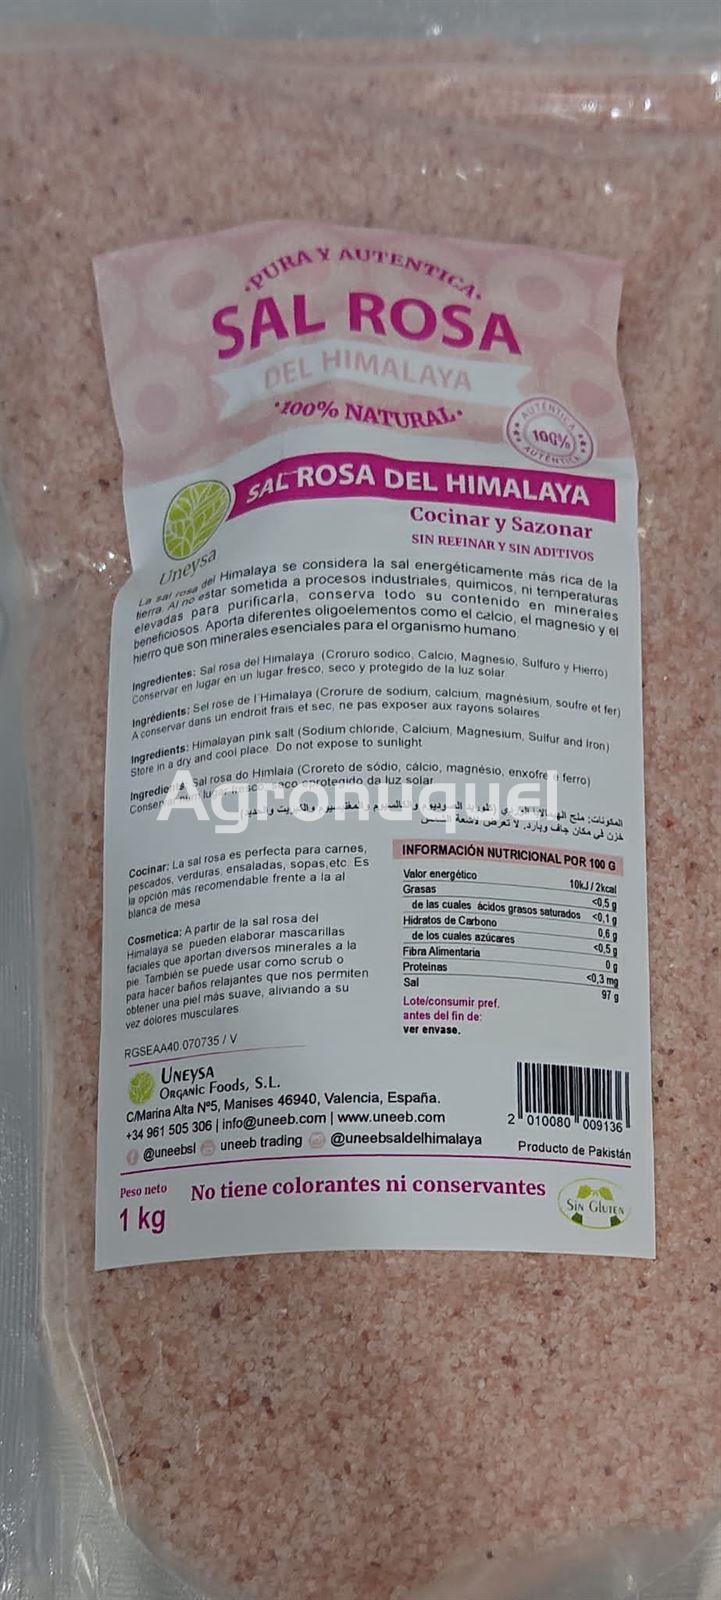 SAL ROSA DEL HIMALAYA - Imagen 1